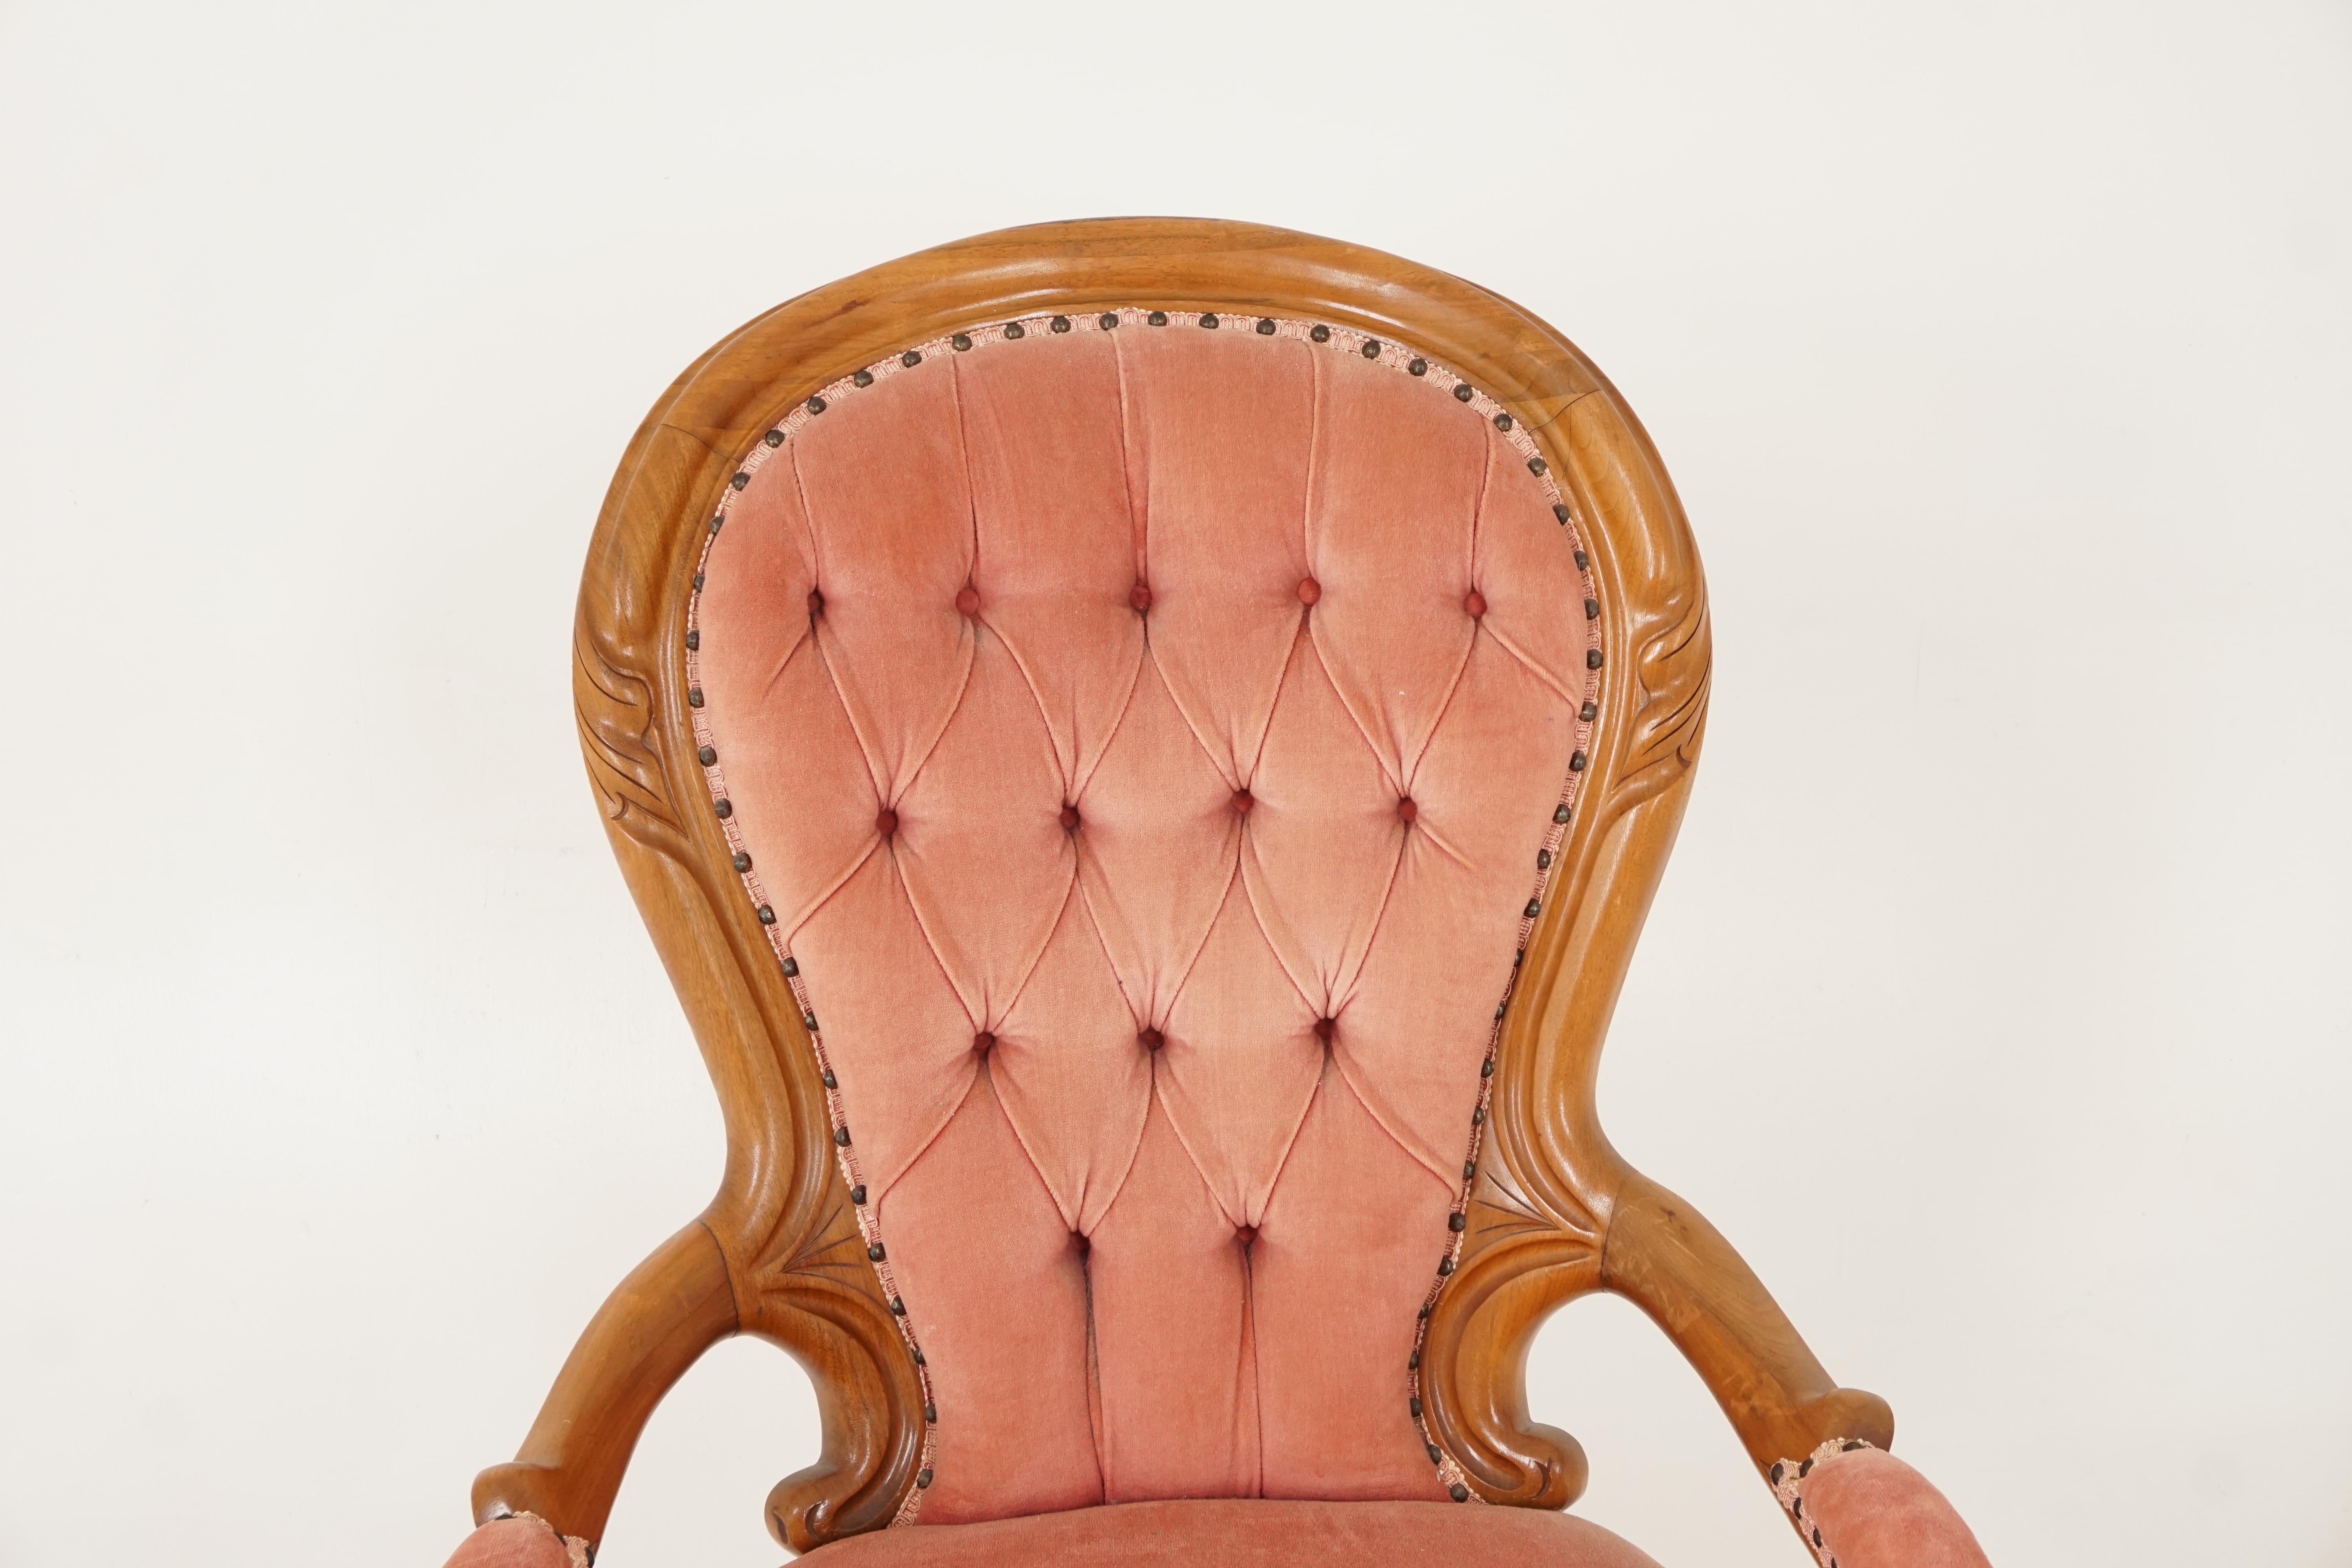 Scottish Antique Victorian Arm Chair, Carved Walnut, Button Back, Scotland 1870, B2504